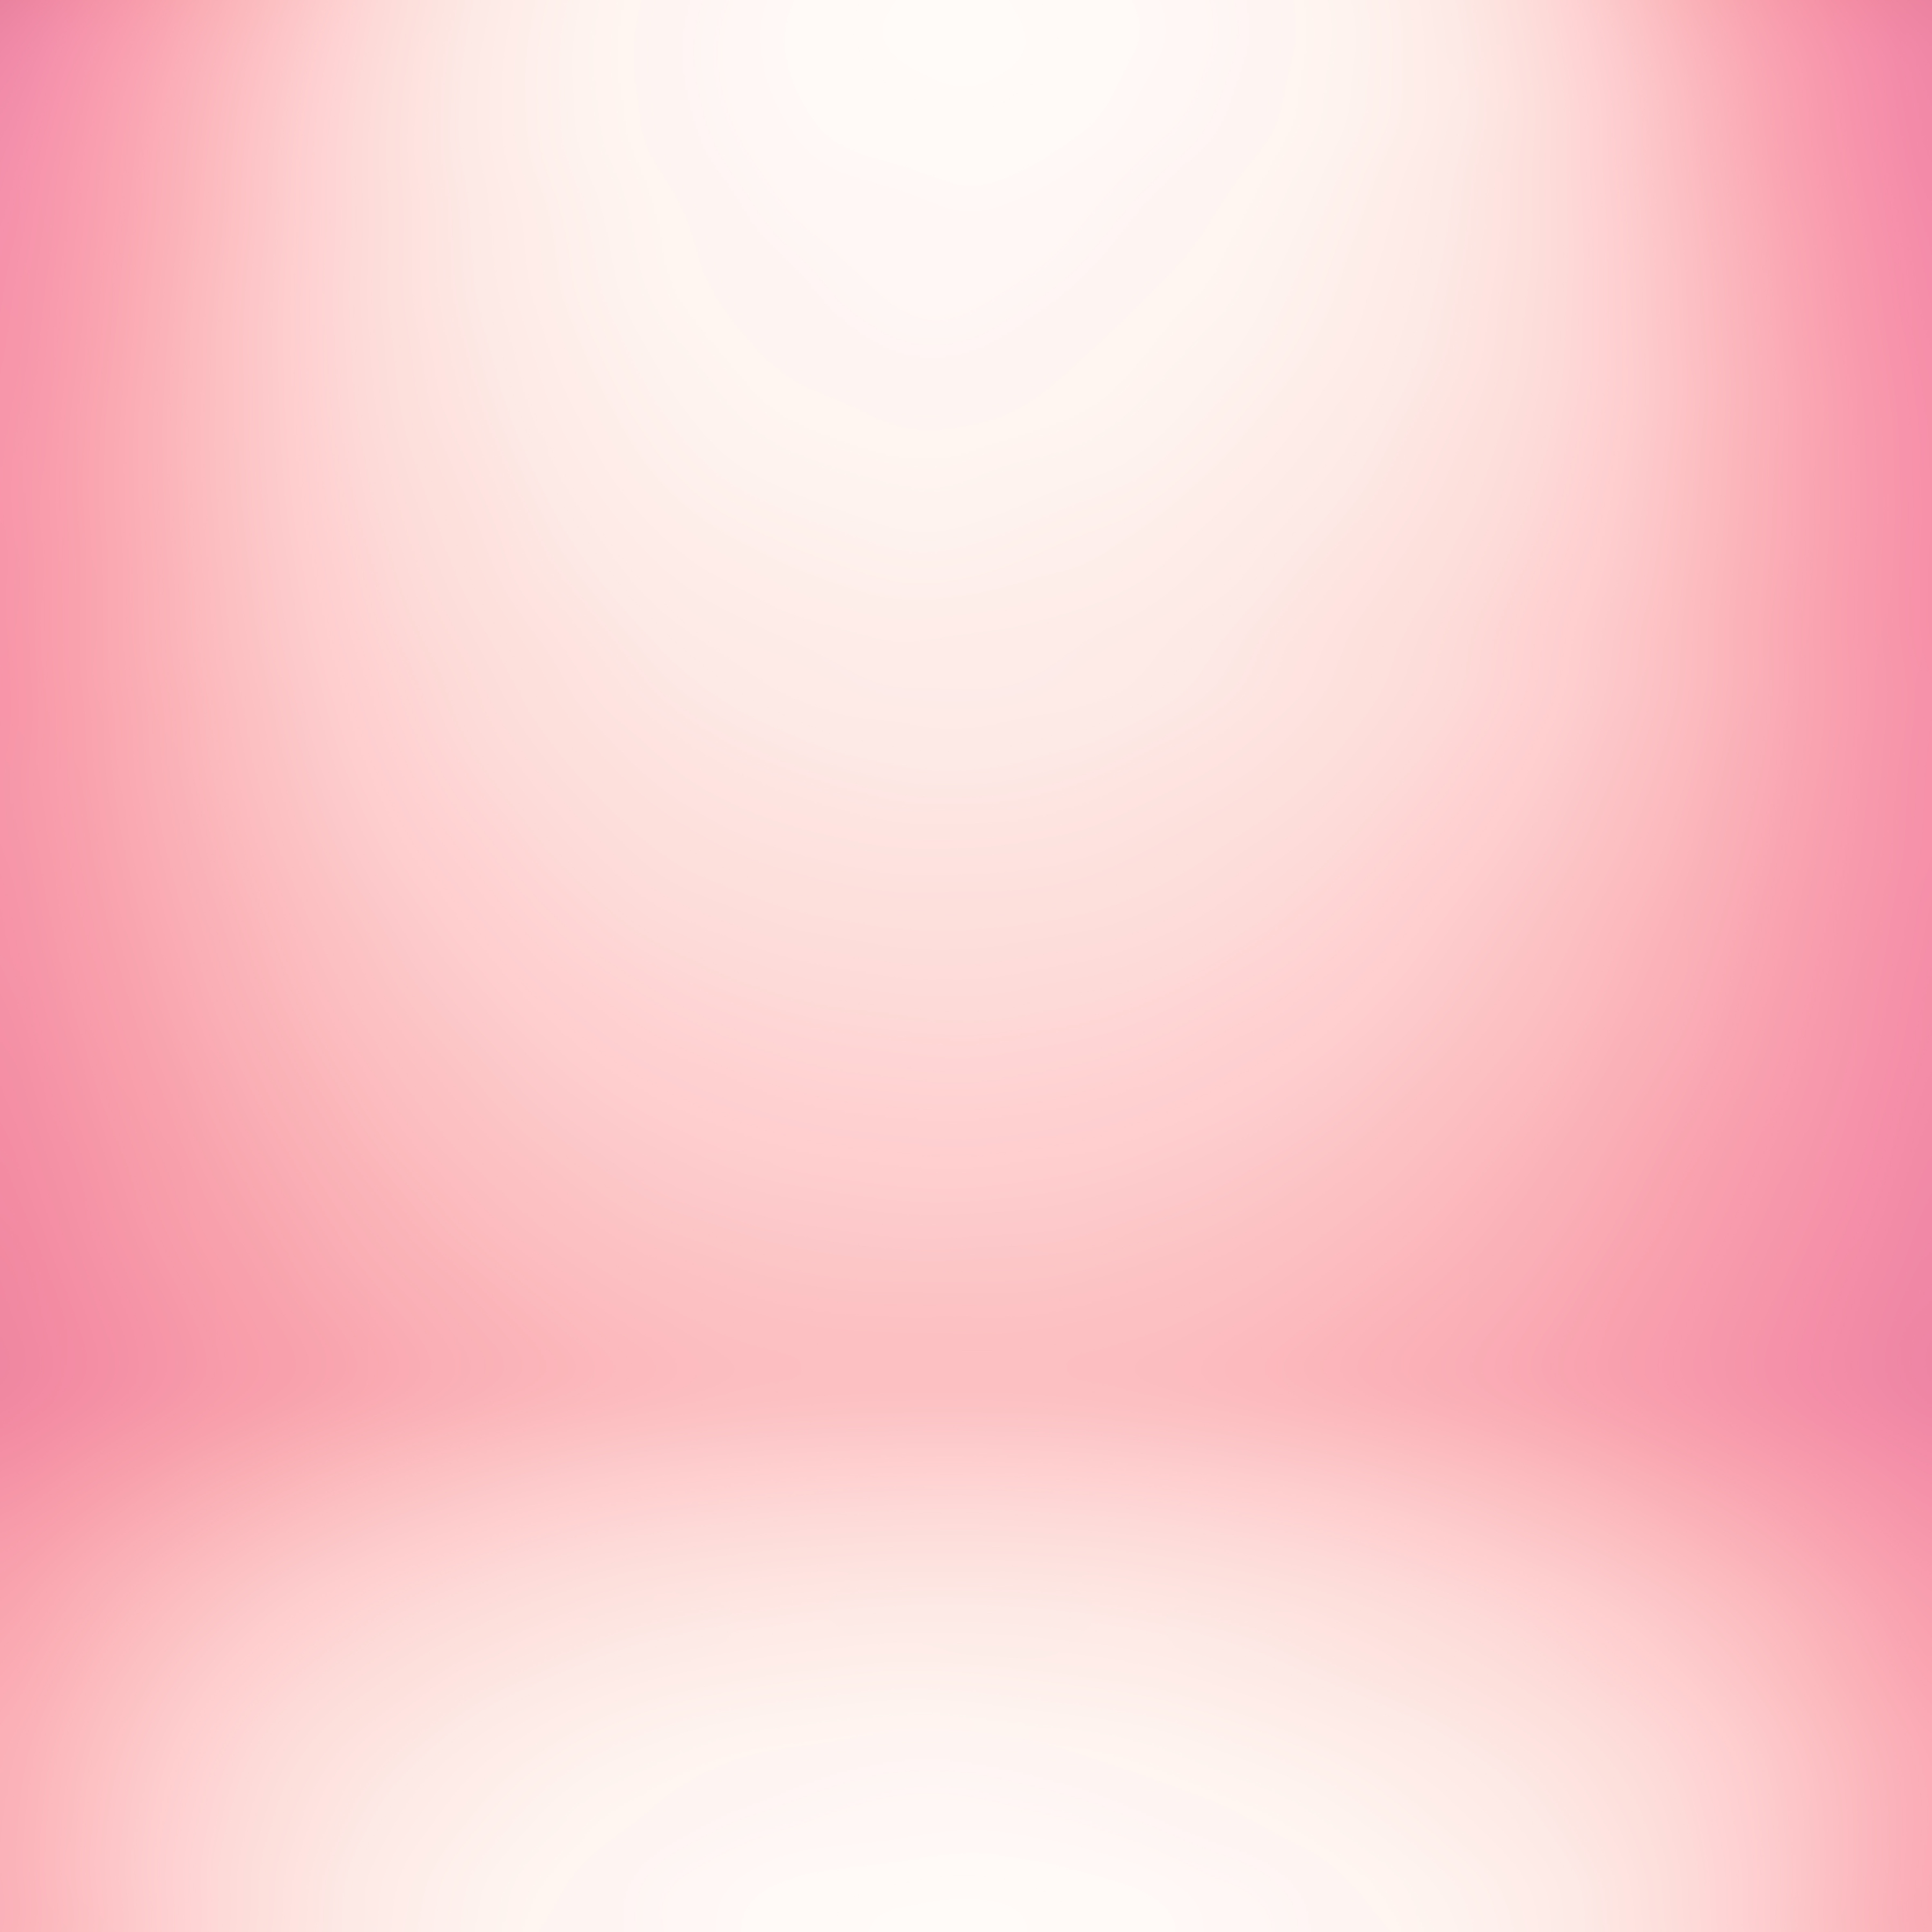 Light pink gradient background